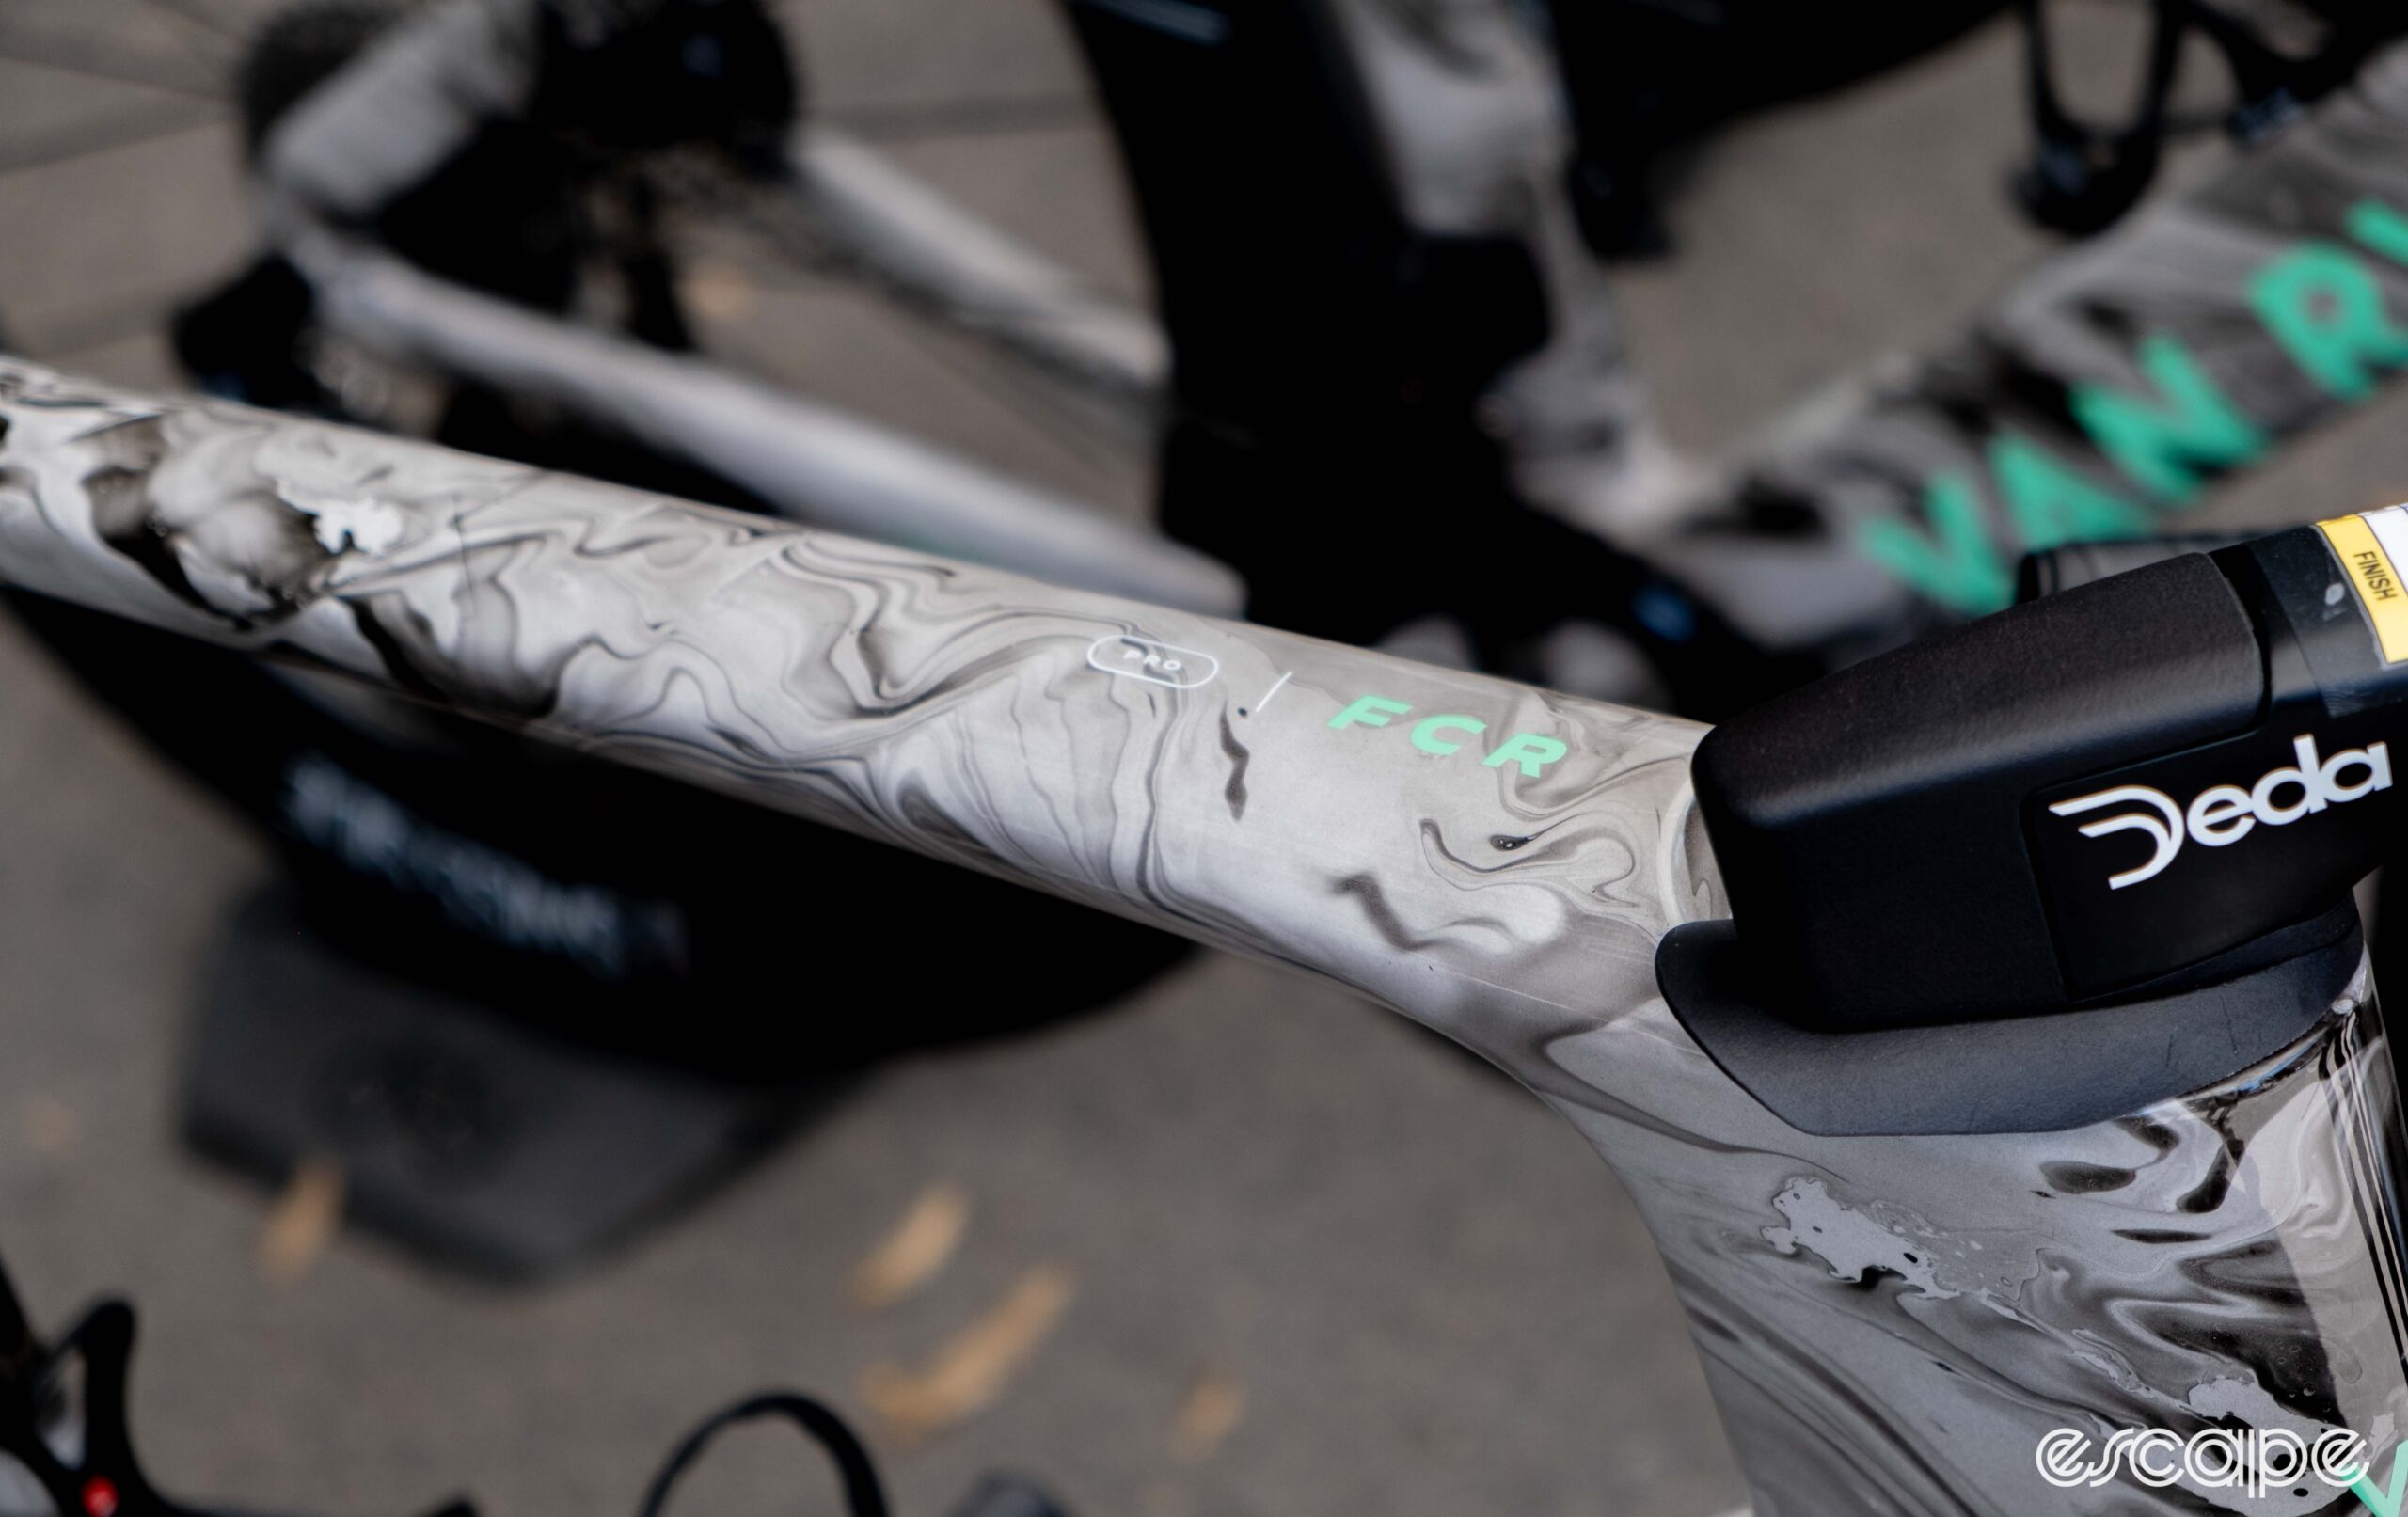 The photo shows Van Rysel's new FCR Pro aero bike top tube